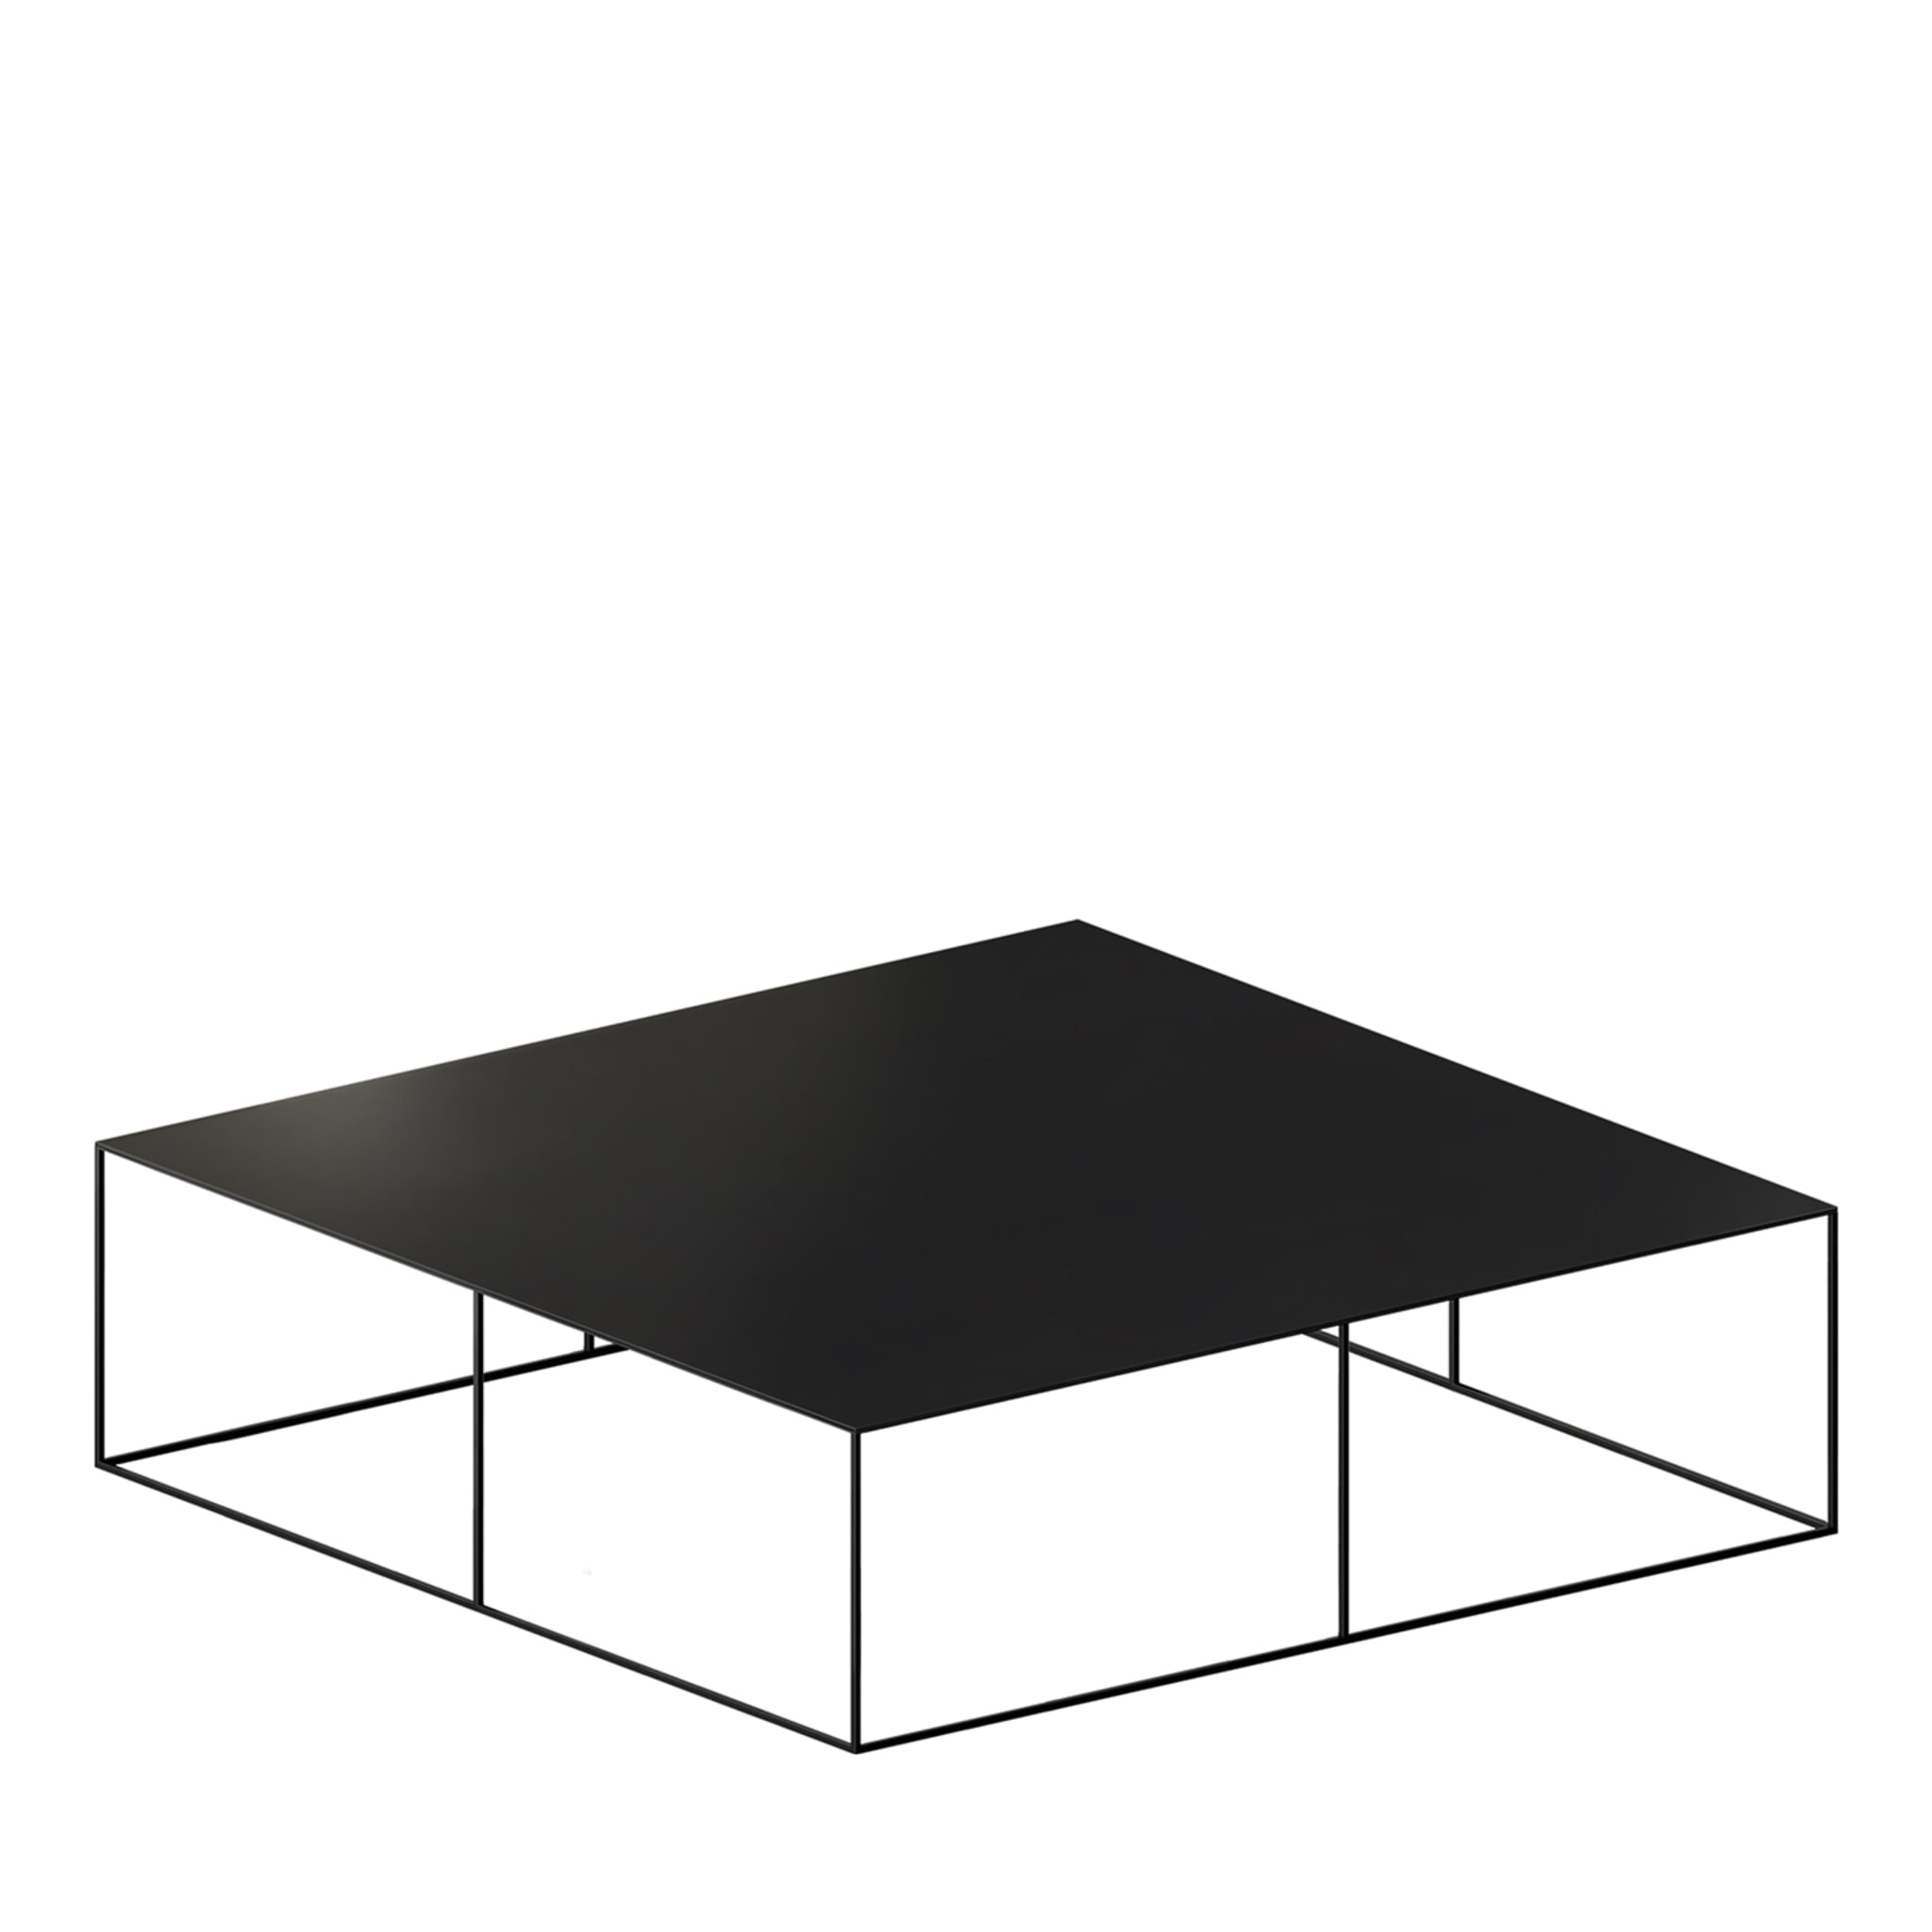 Slim Irony Square Black Coffee Table by Maurizio Peregalli - Main view